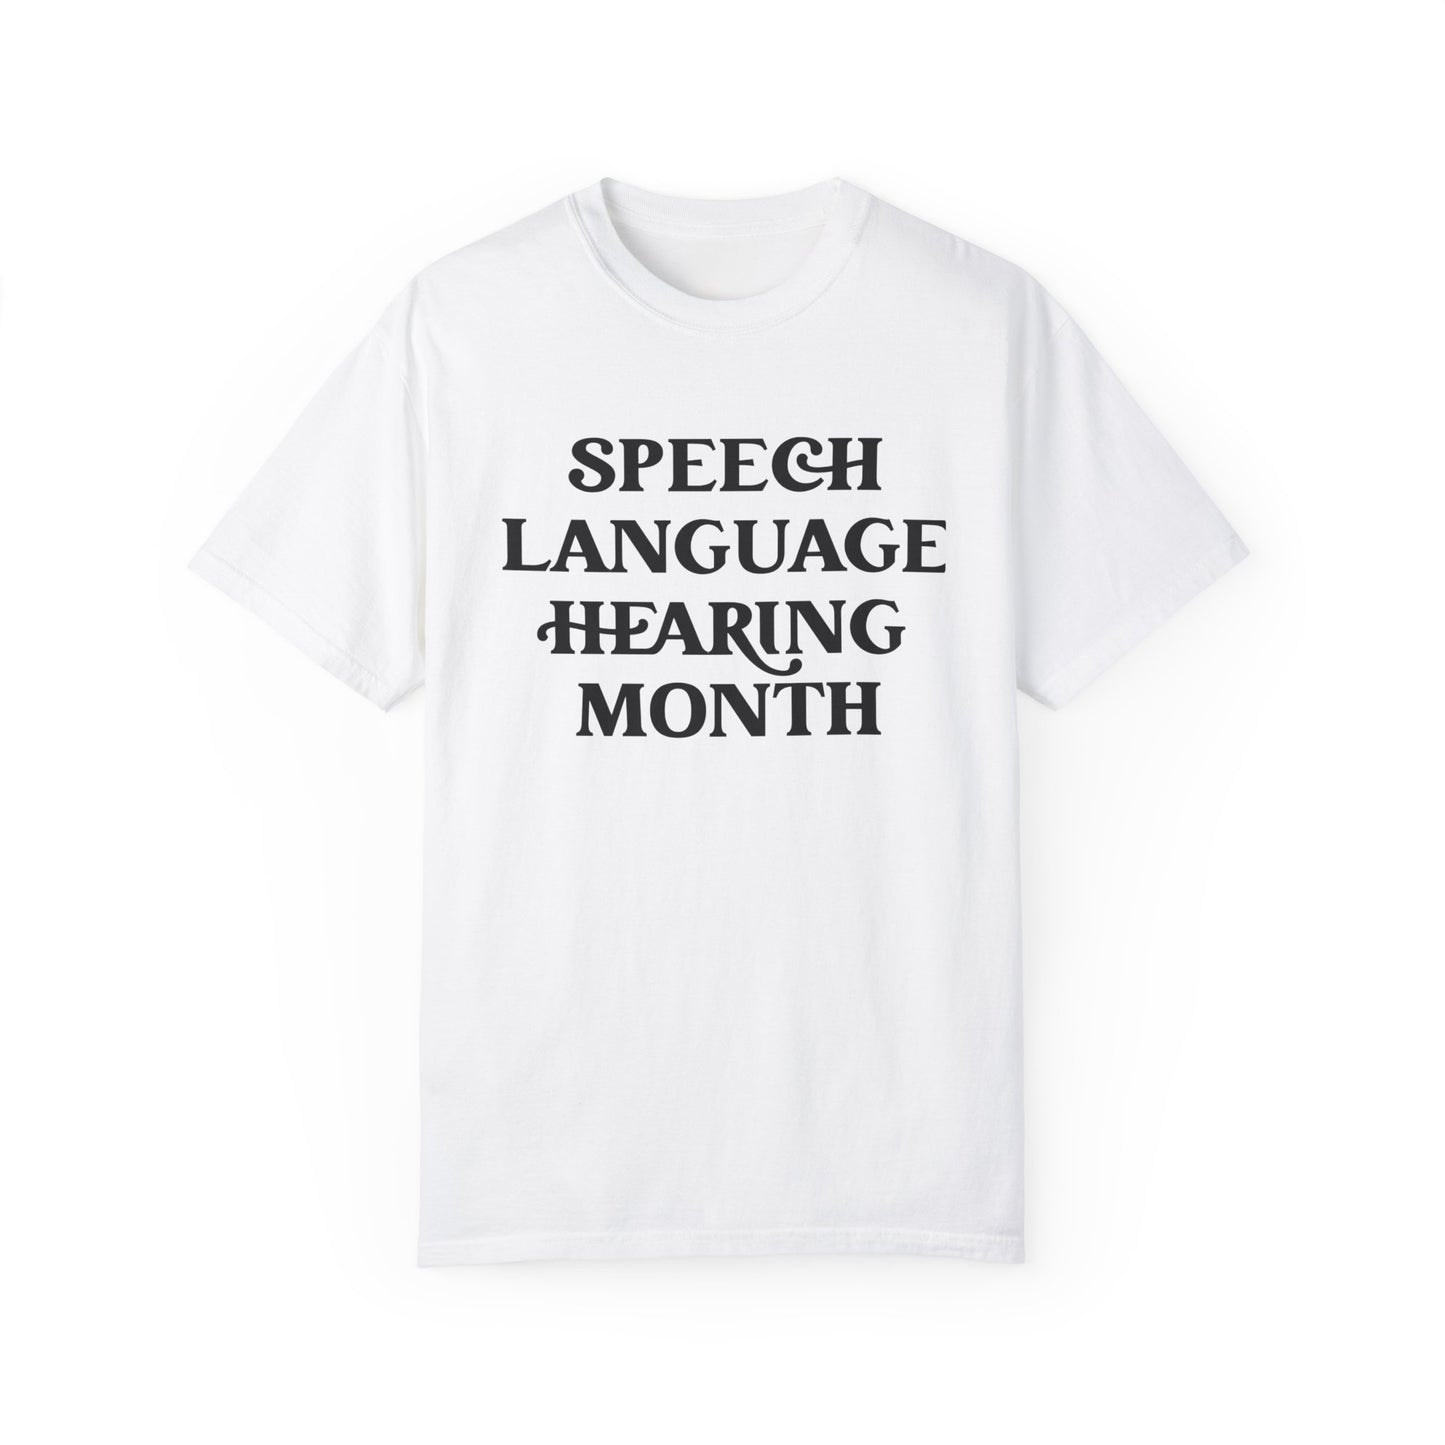 Speech Language Hearing Month Tee (Comfort Colors)